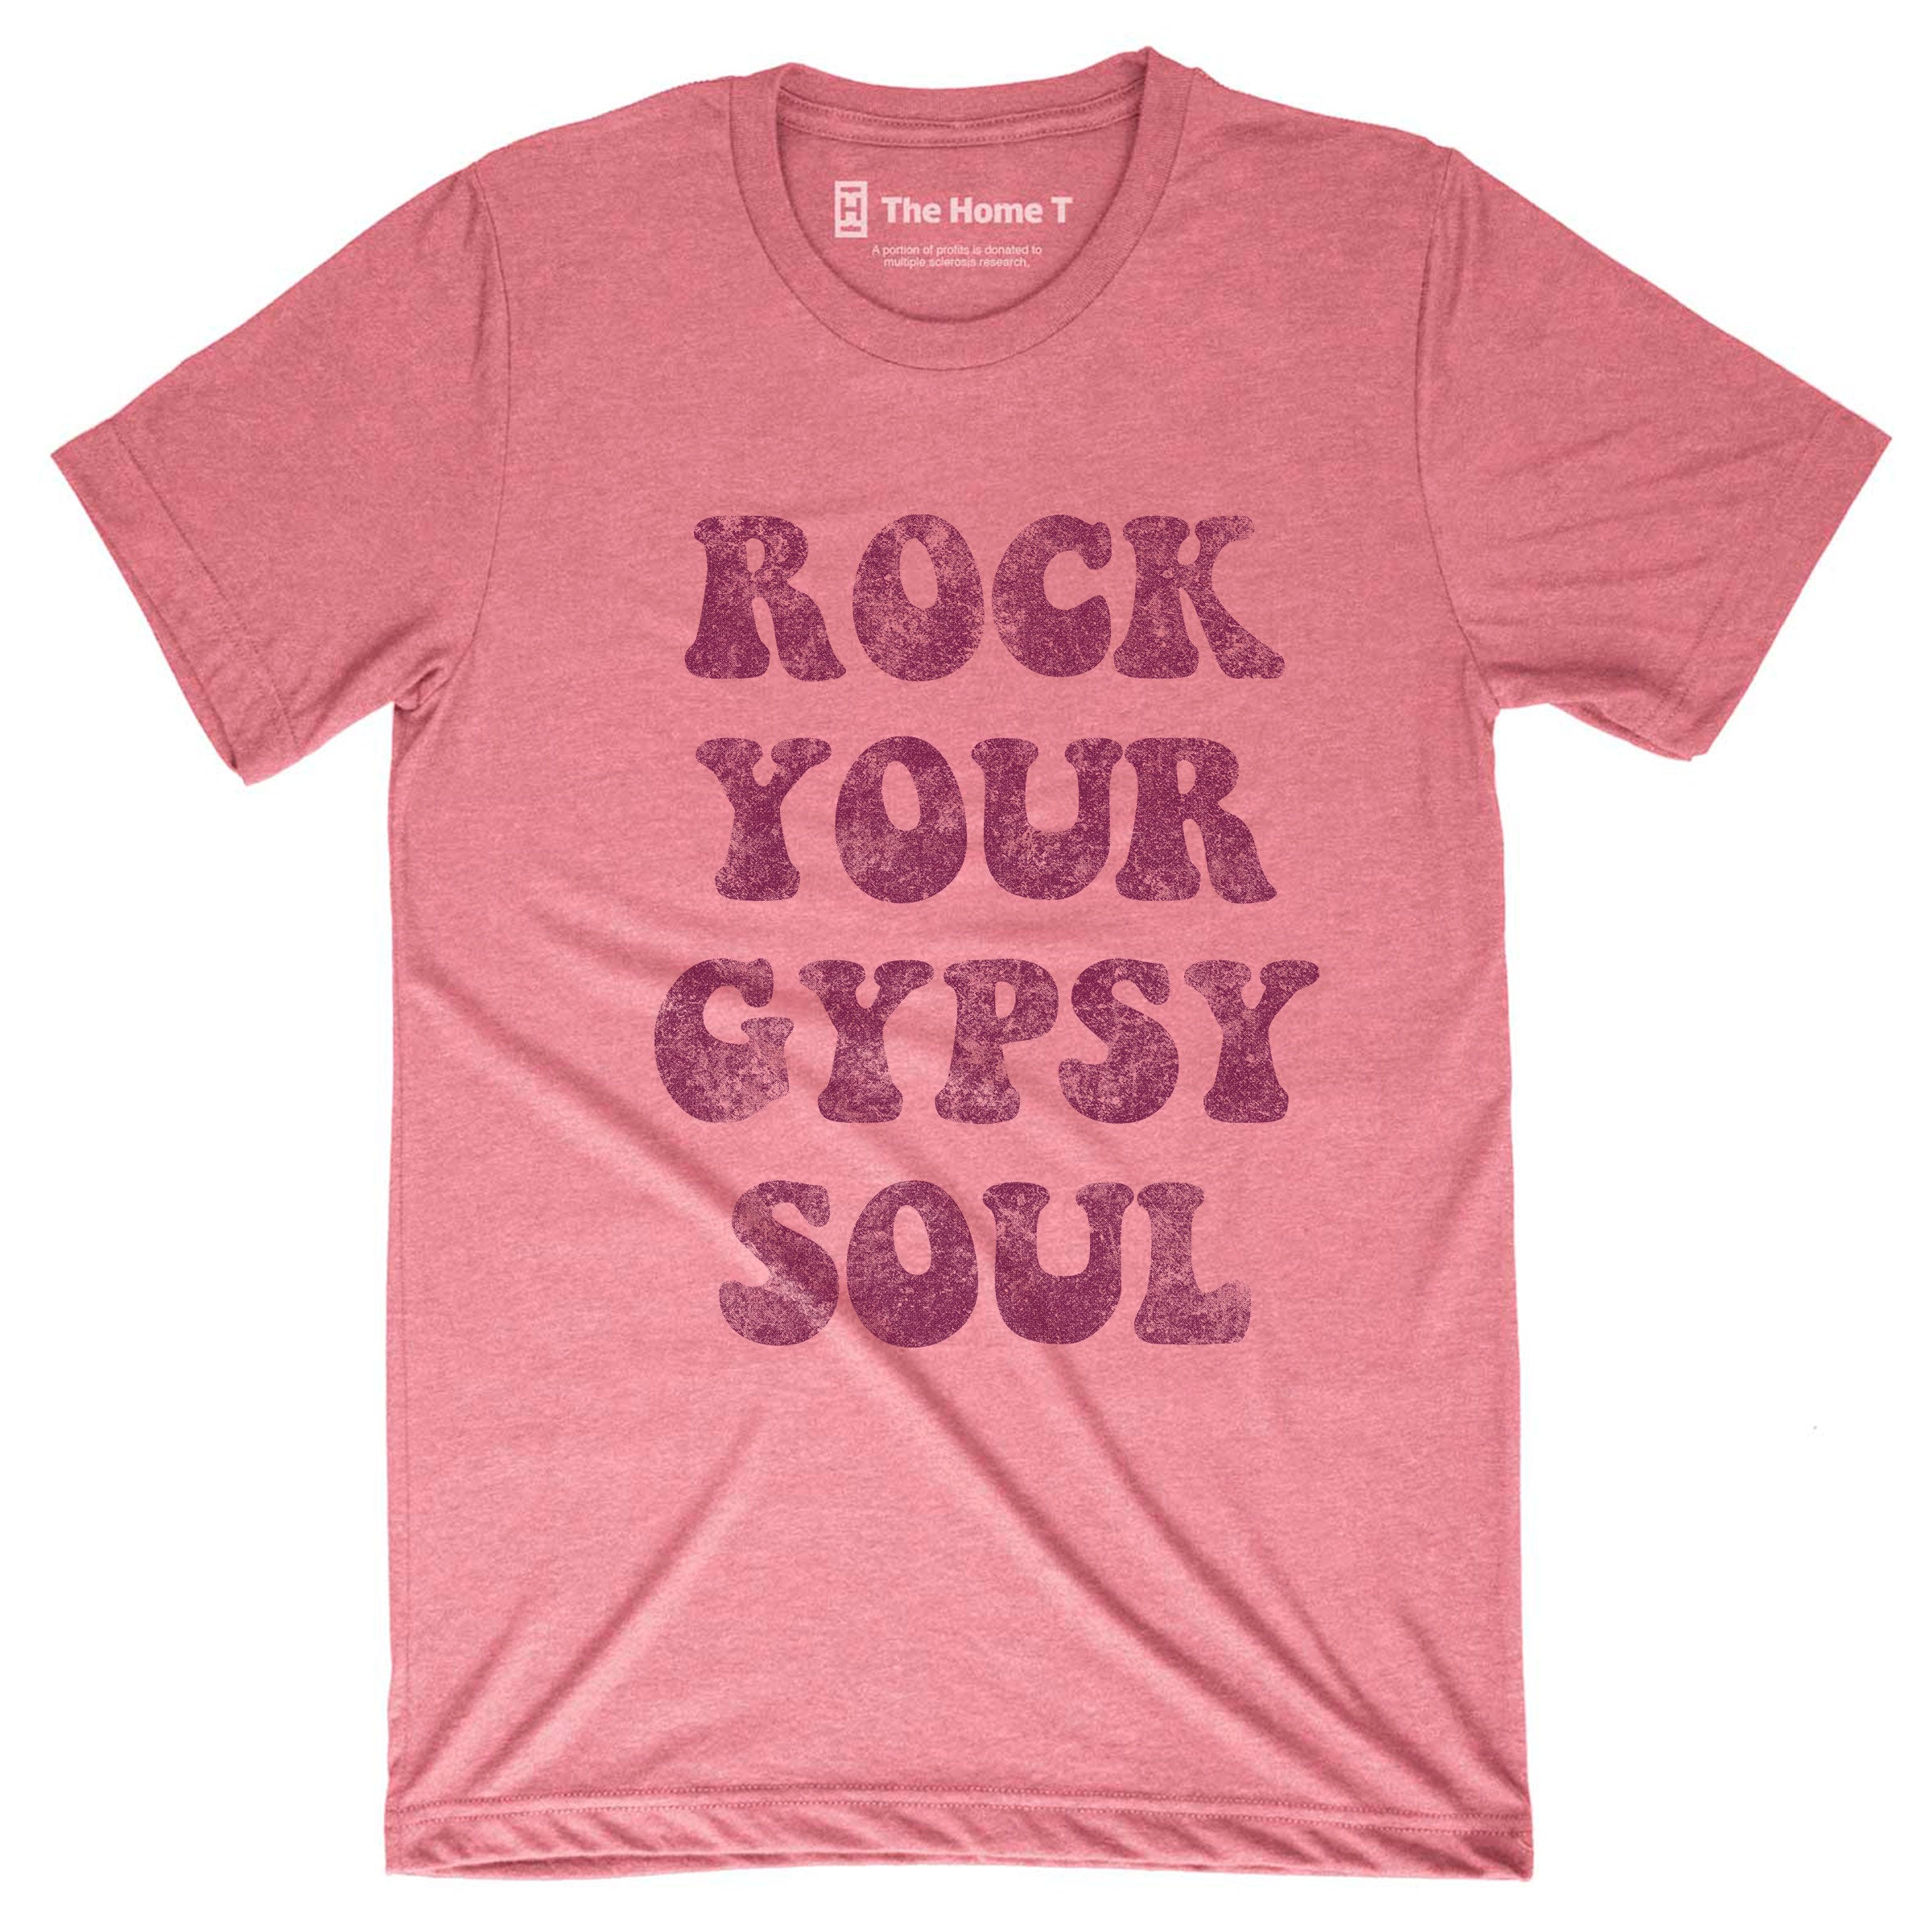 Rock Your Gypsy Soul